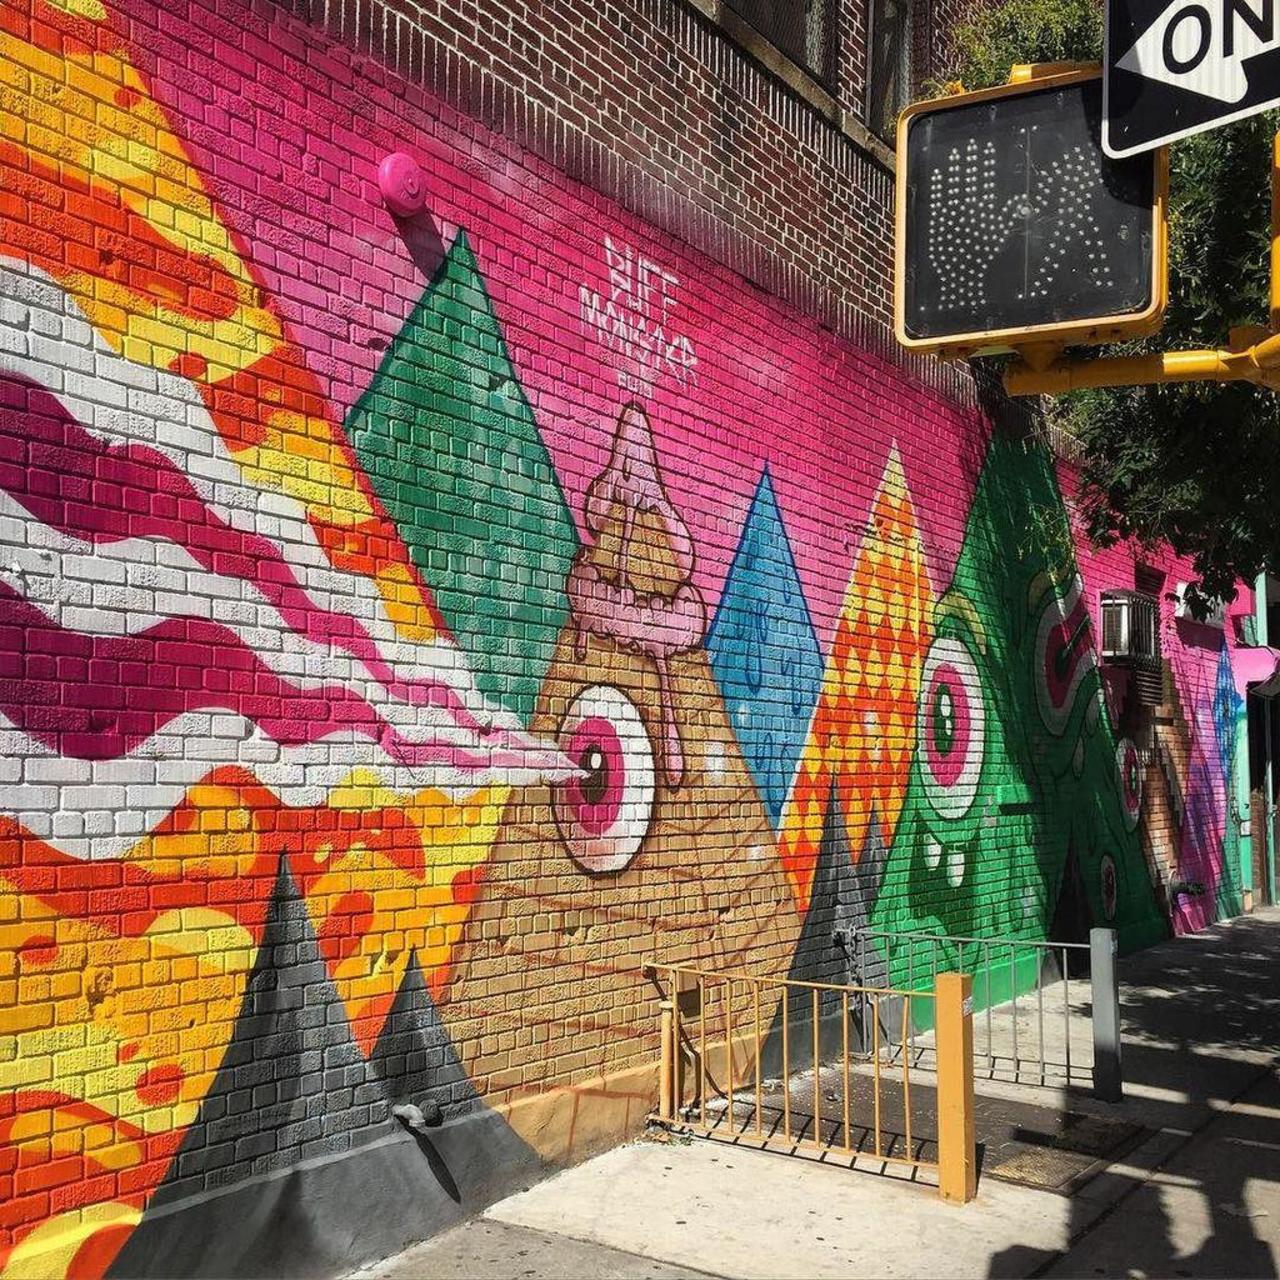 Mural Arts
Chrystie Street NYC
@buffmonster #graff #graffiti #graffitinyc #outsider #outsiderart #street #streetart… http://t.co/GVHzkrHyym